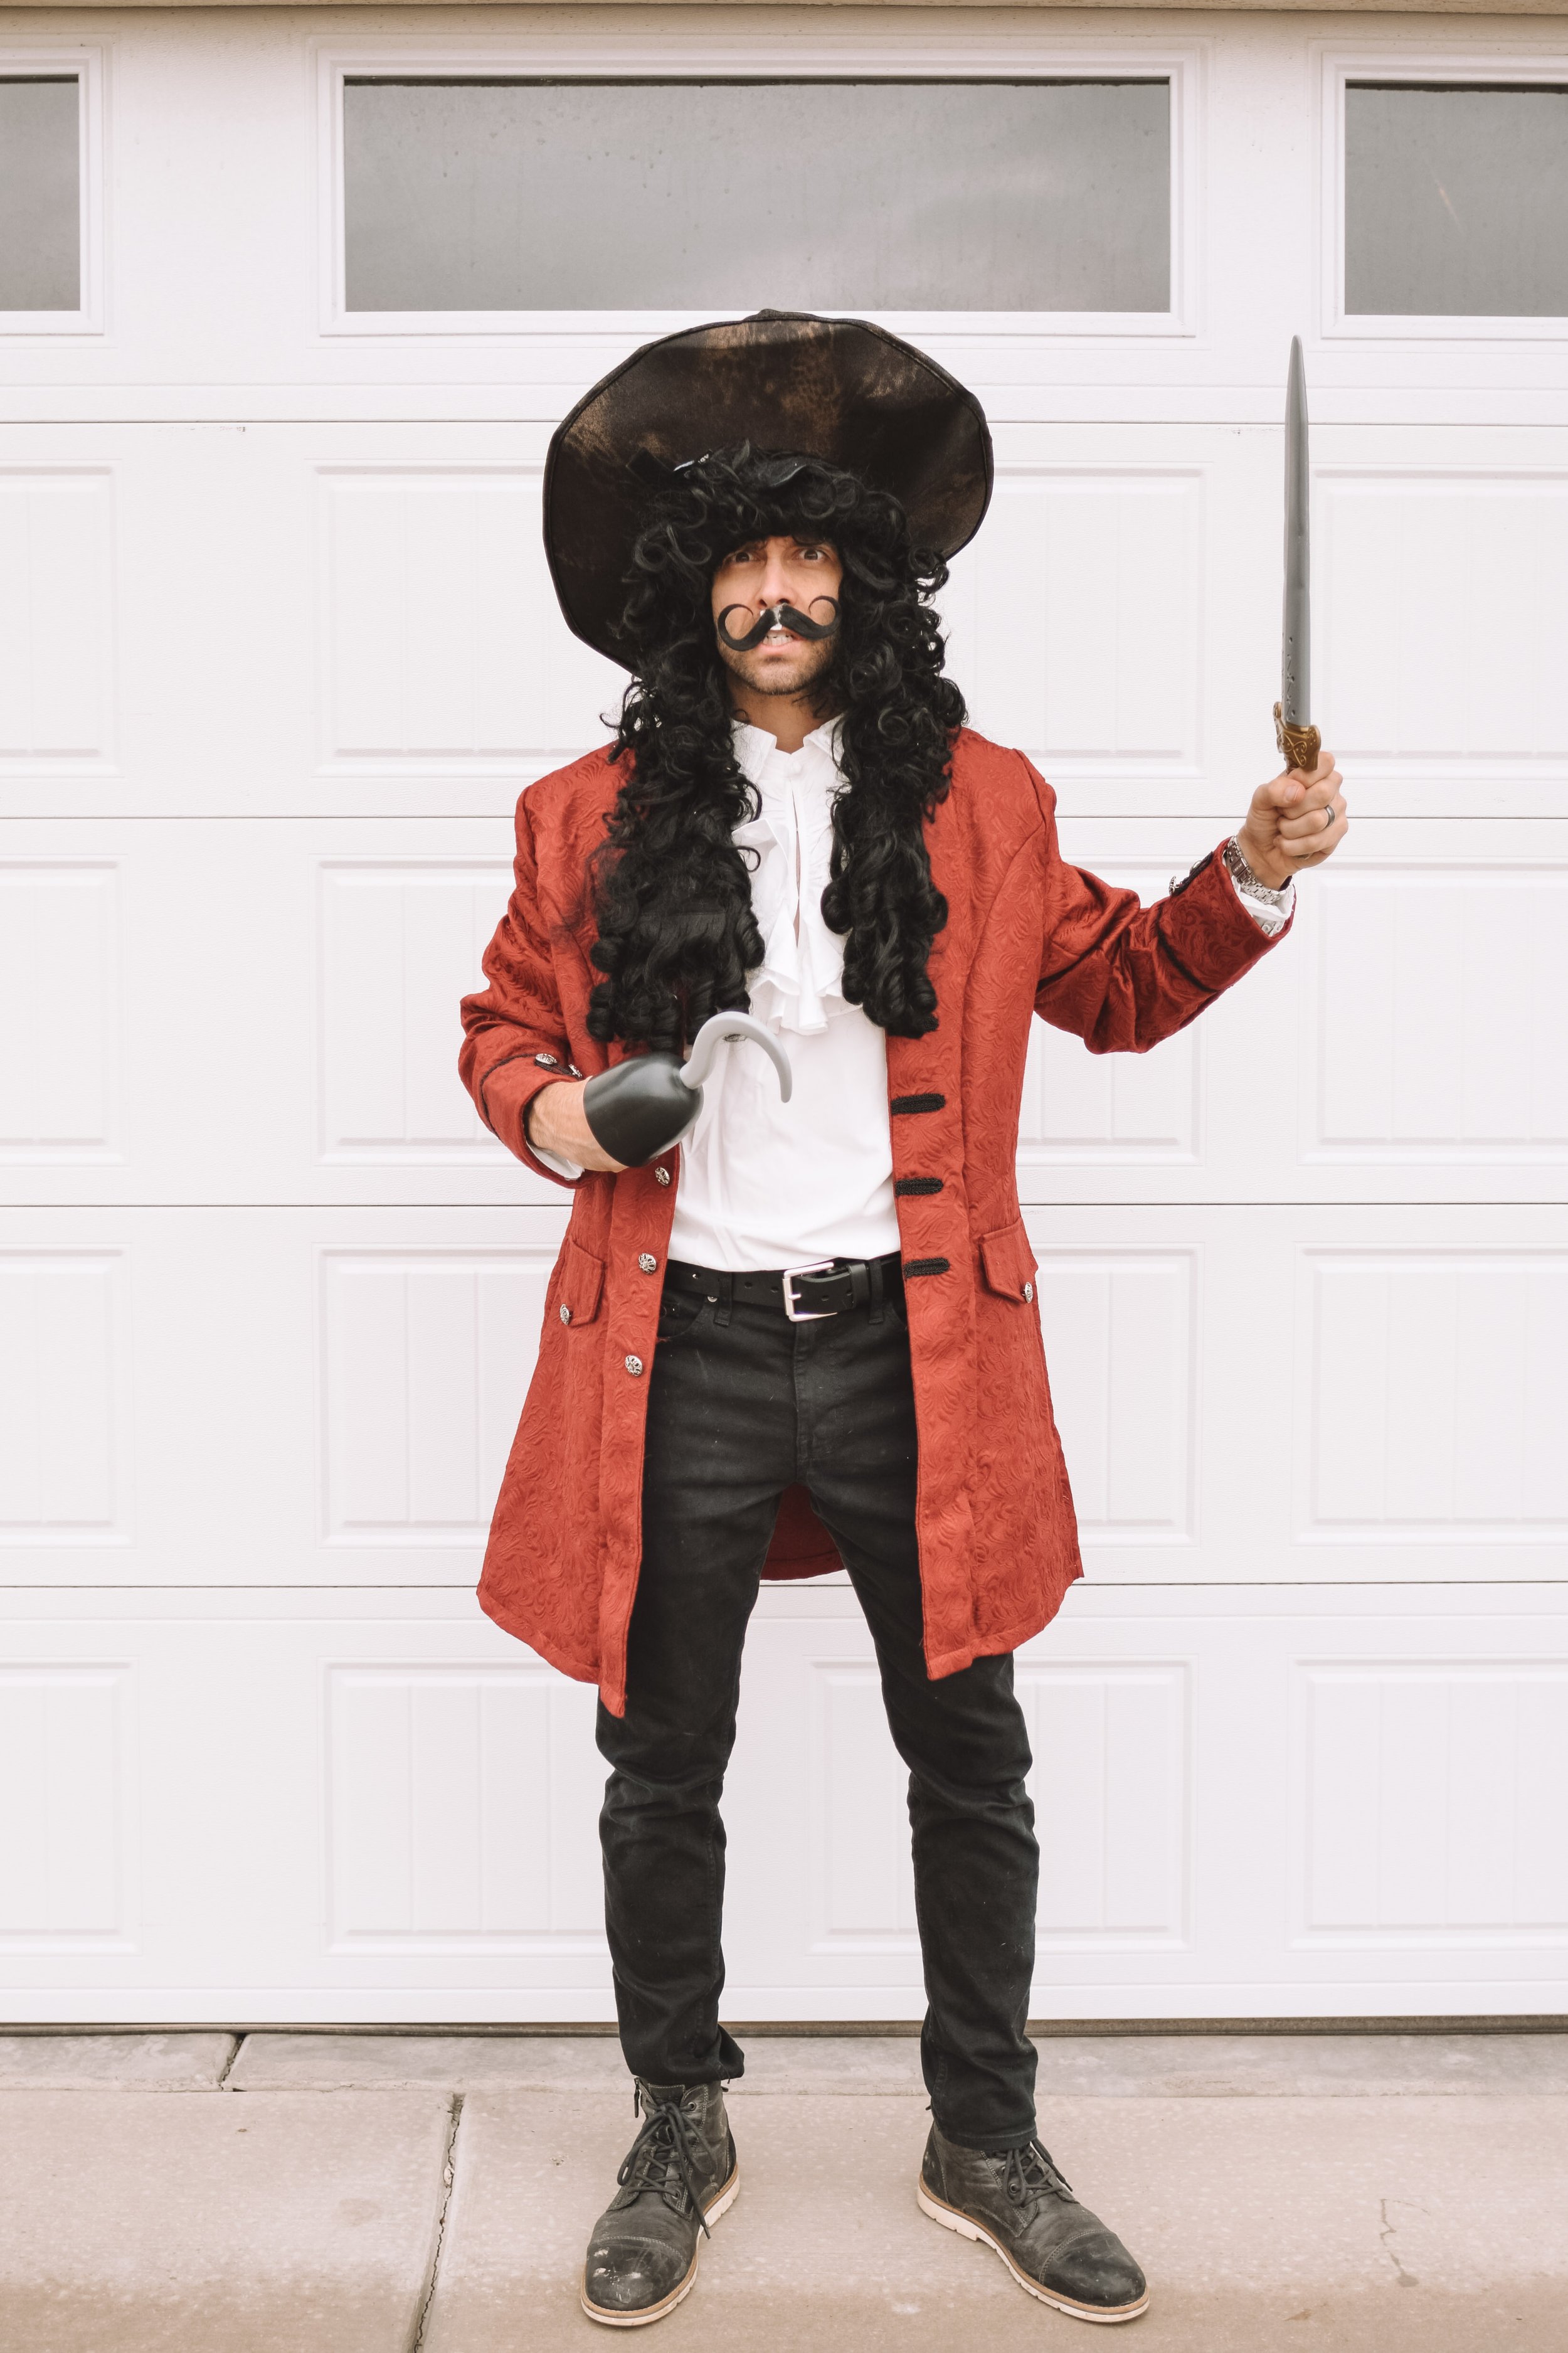 Peter Pan Captain Hook Cosplay Costume, Captain Hook Costume Adult